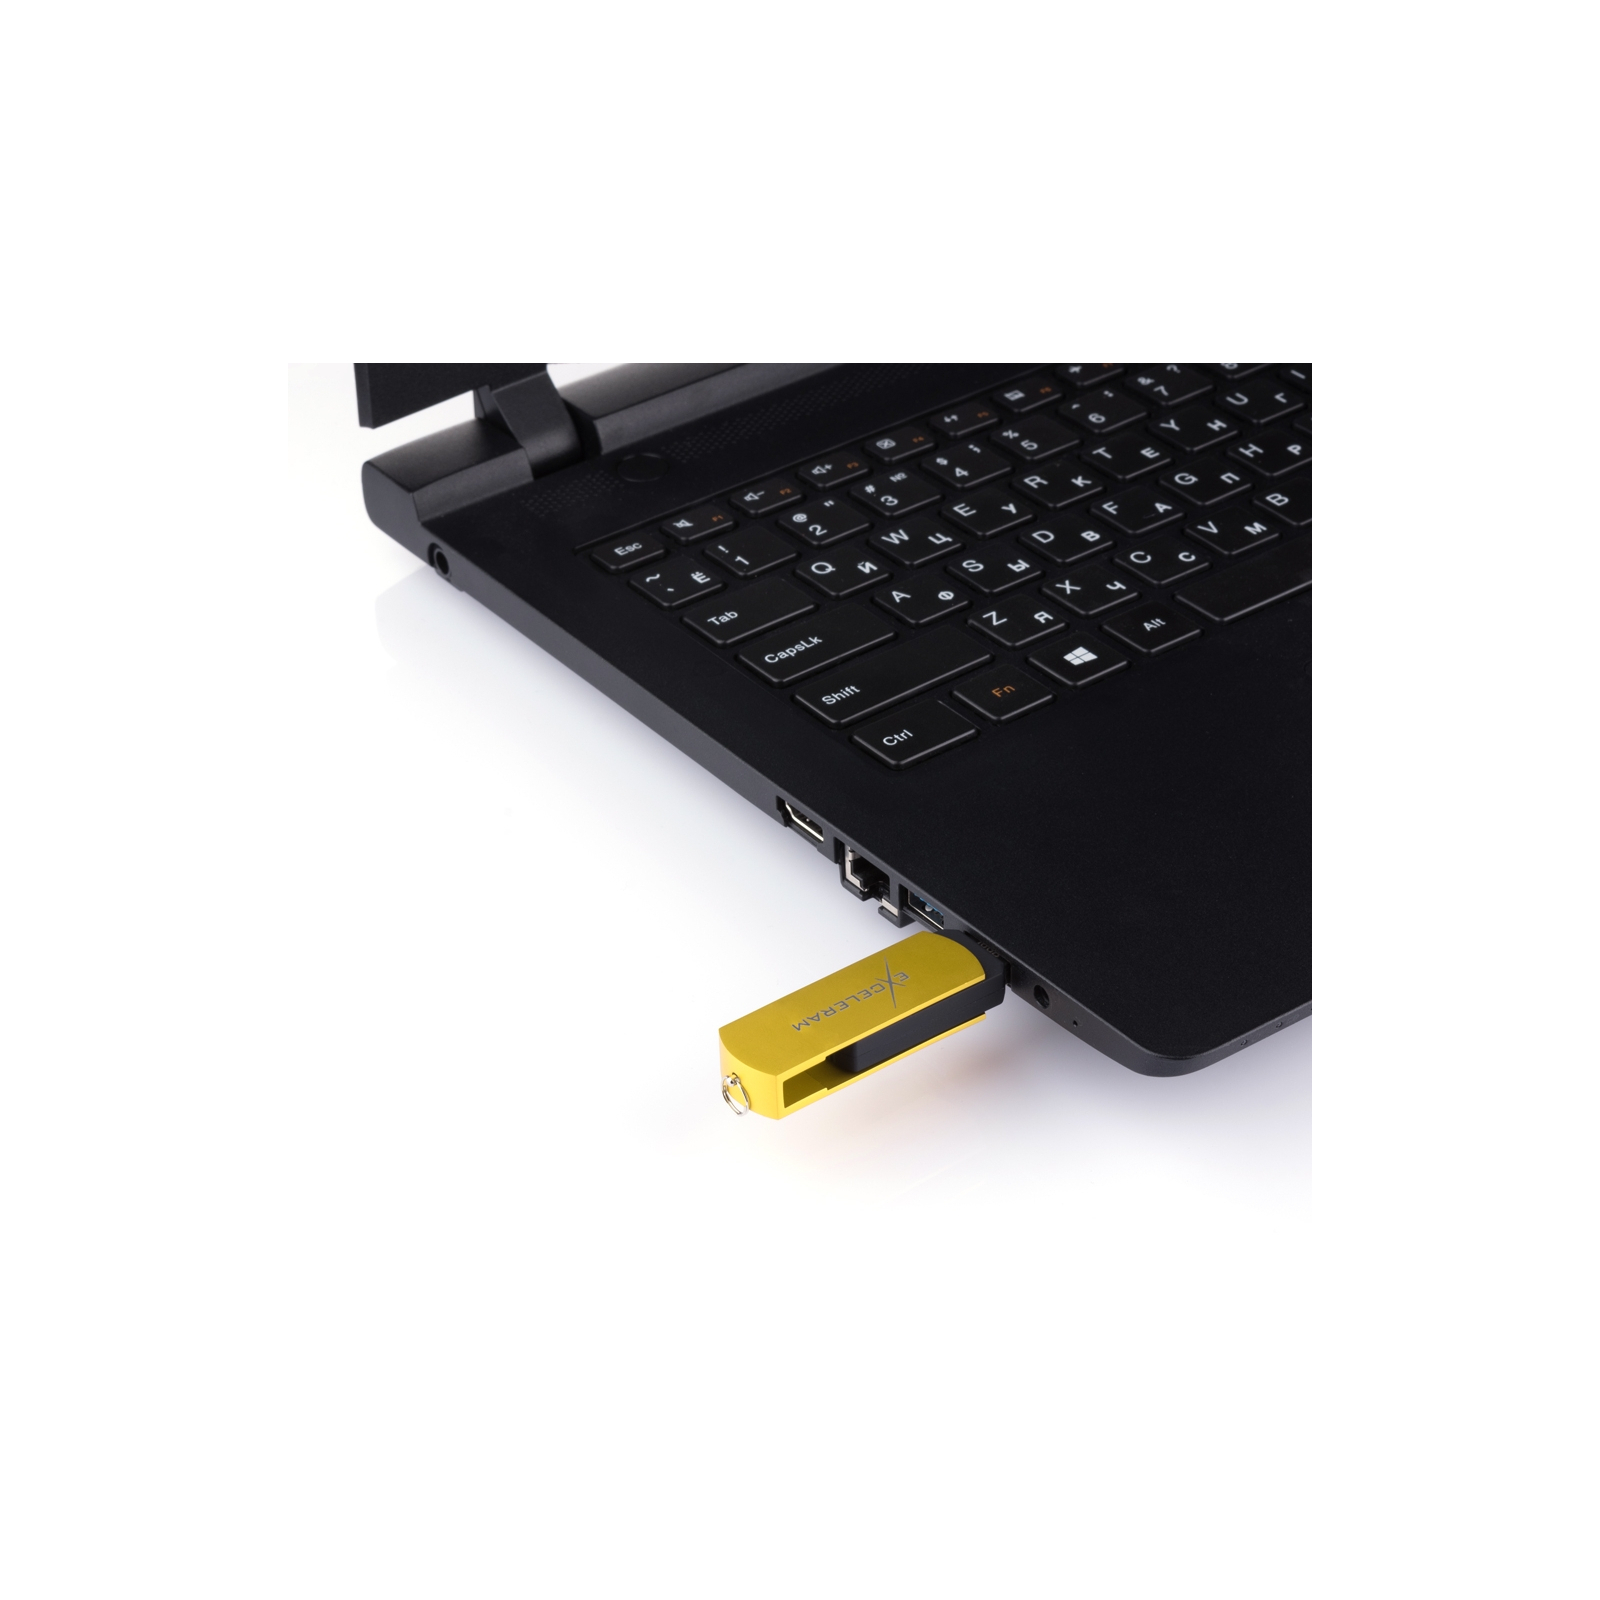 USB флеш накопитель eXceleram 32GB P2 Series Yellow2/Black USB 3.1 Gen 1 (EXP2U3Y2B32) изображение 7